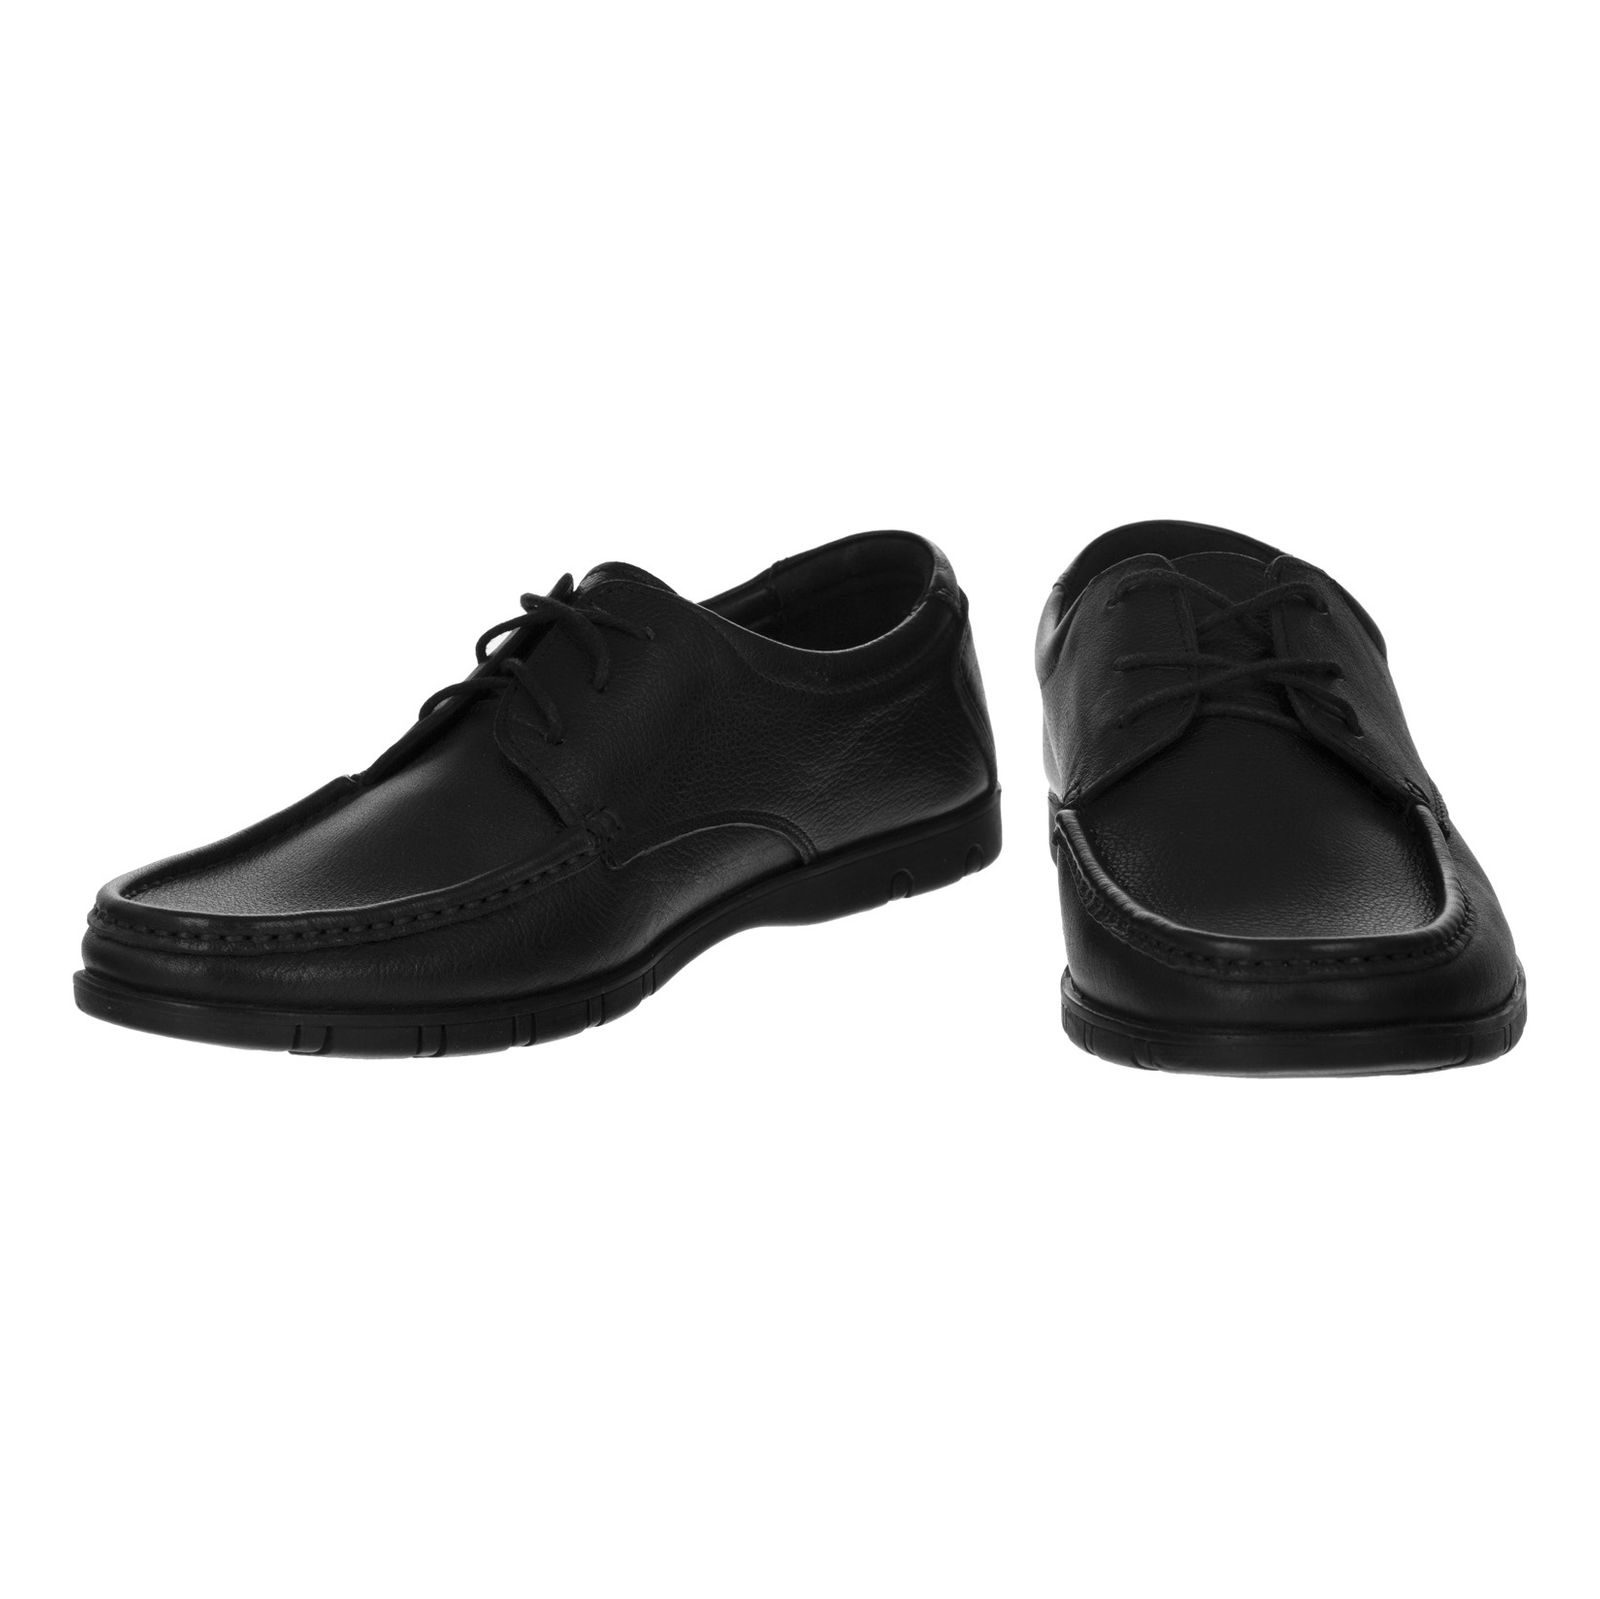 کفش روزمره مردانه فلوگارت مدل 100317181-101 - مشکی - 4